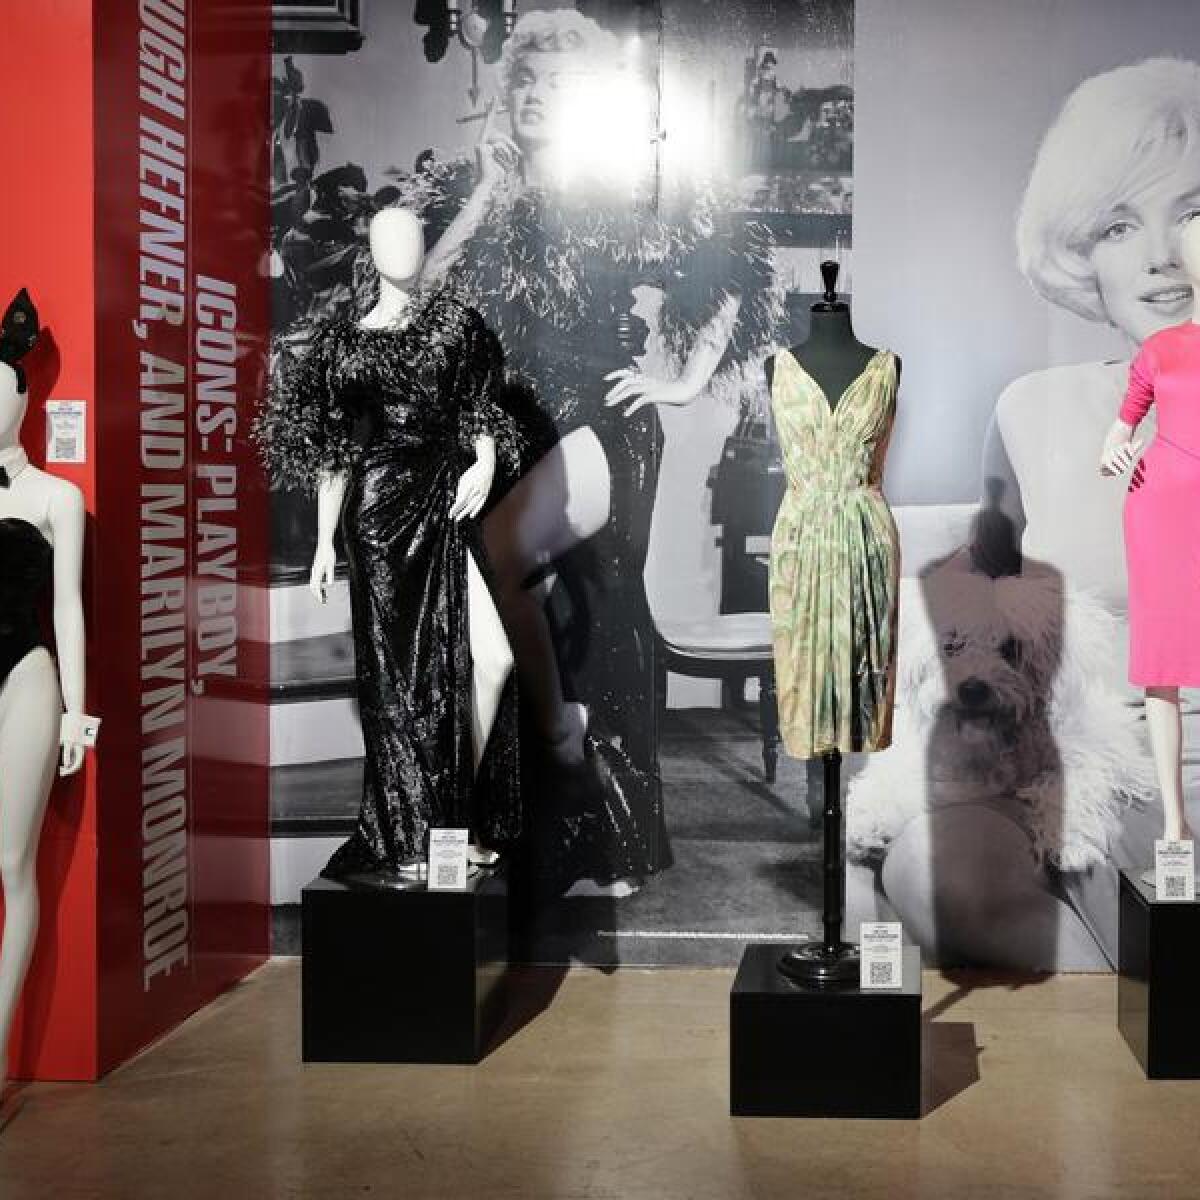 Marilyn Monroe dress sells half a million